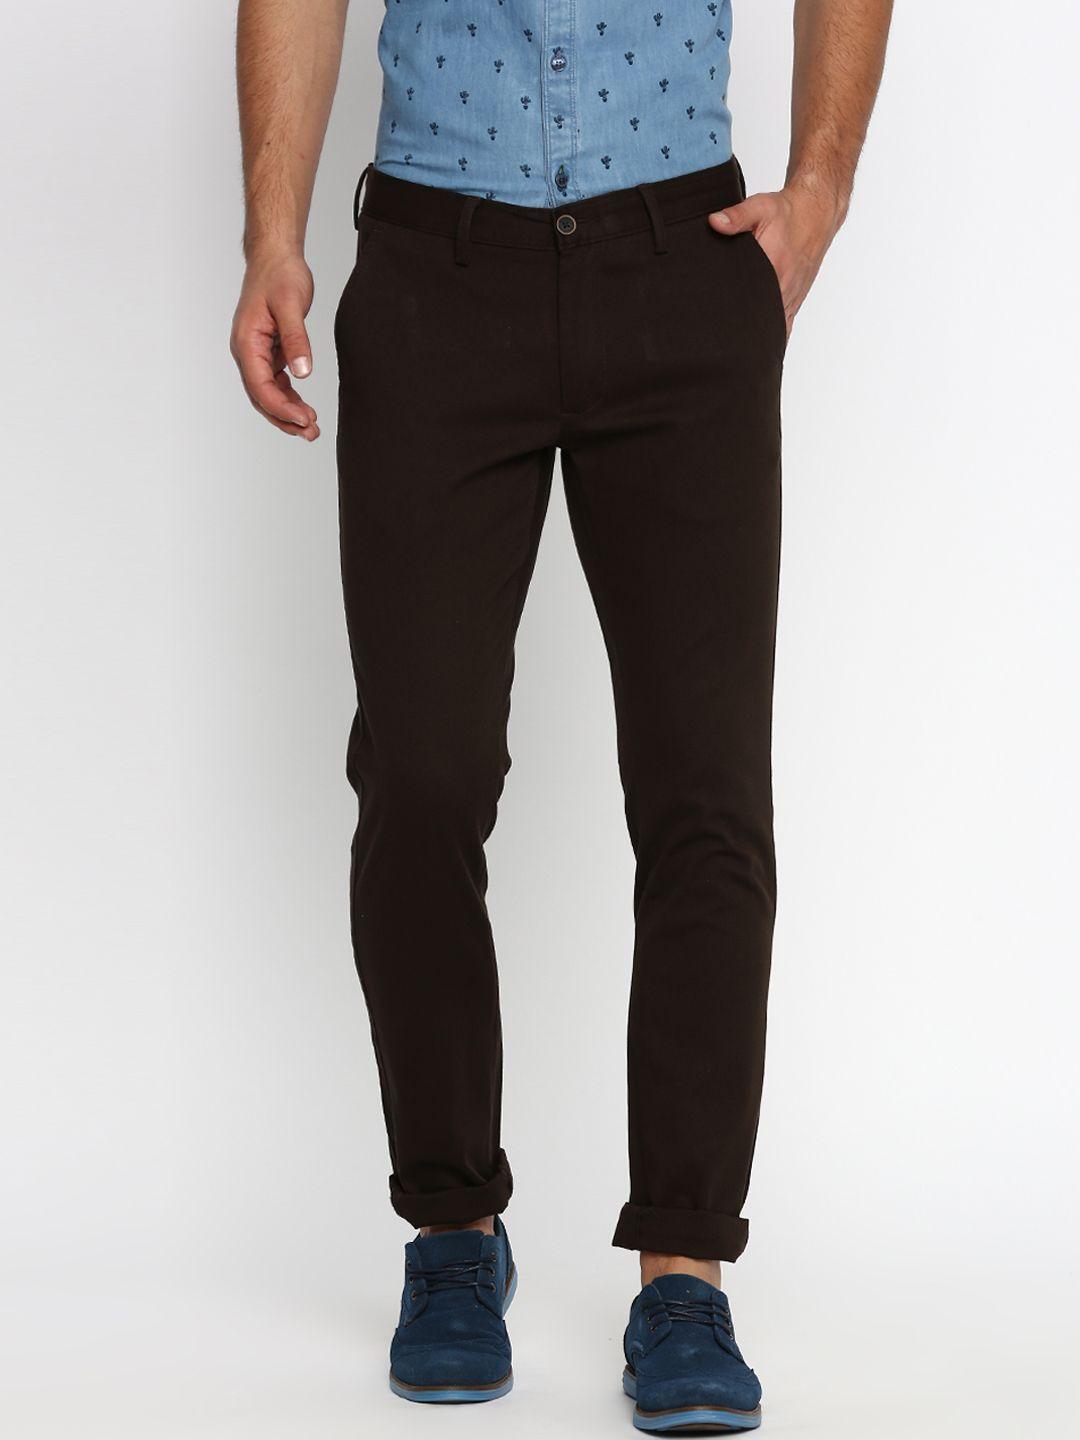 basics men brown tapered fit solid regular trousers